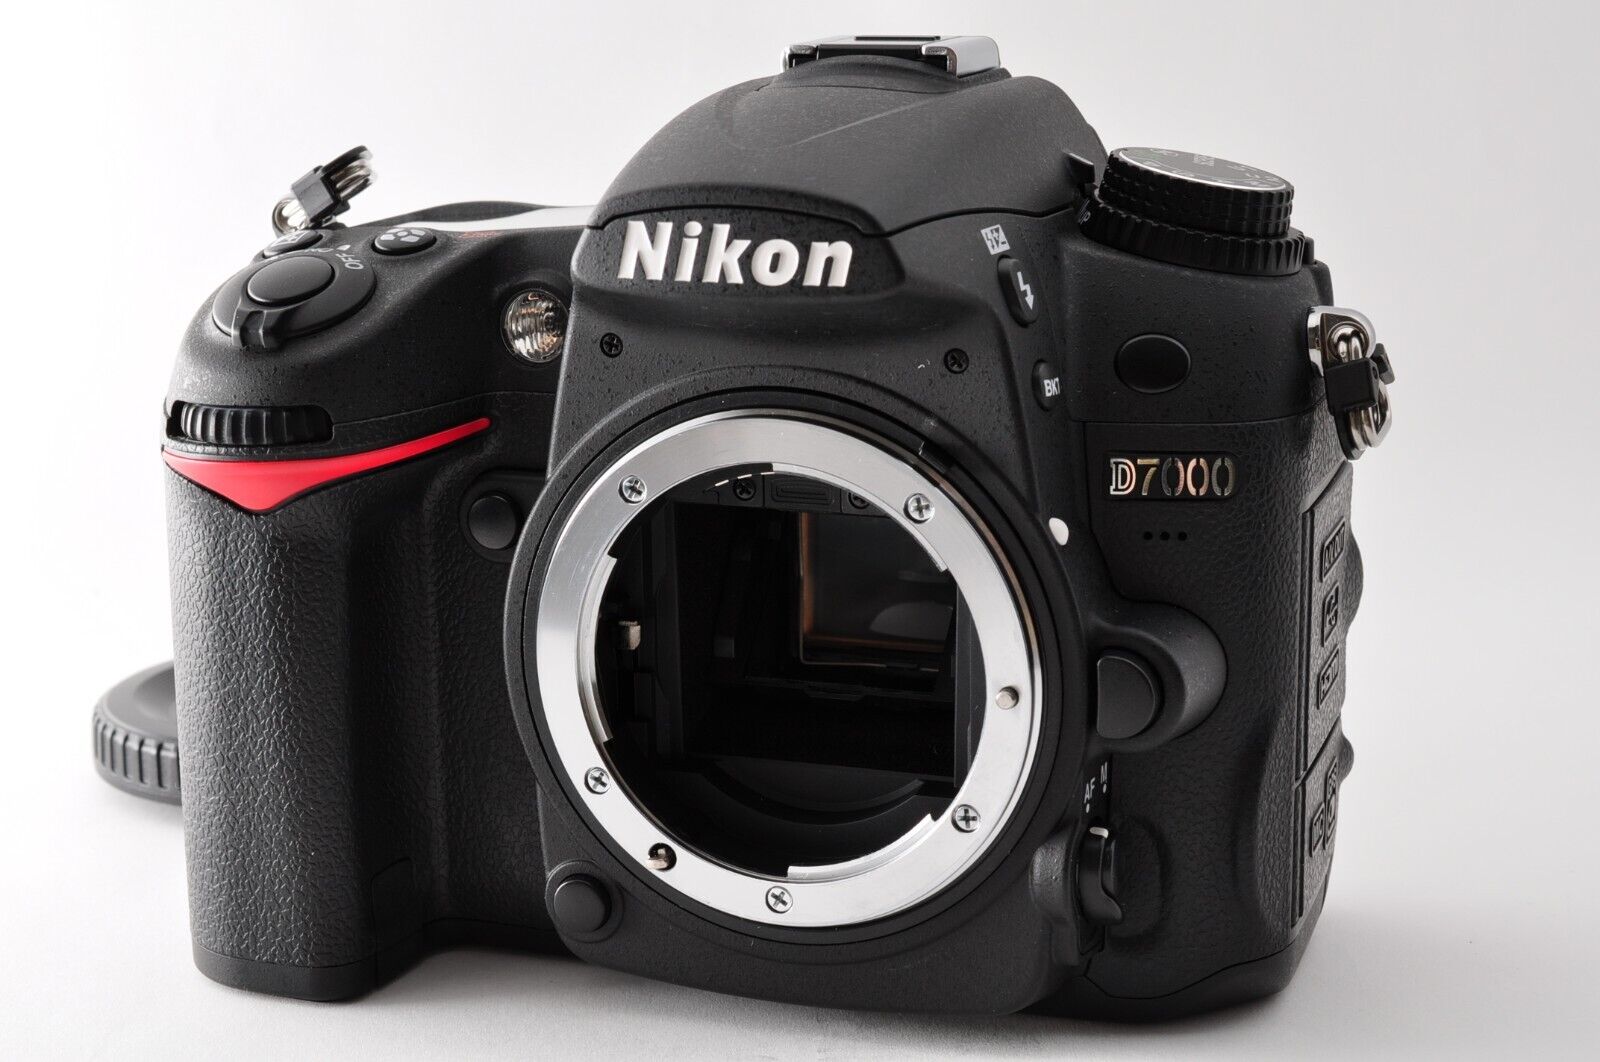 [Mint] Nikon D7000 16.2 MP Digital SLR Camera Body Black Count: 2207